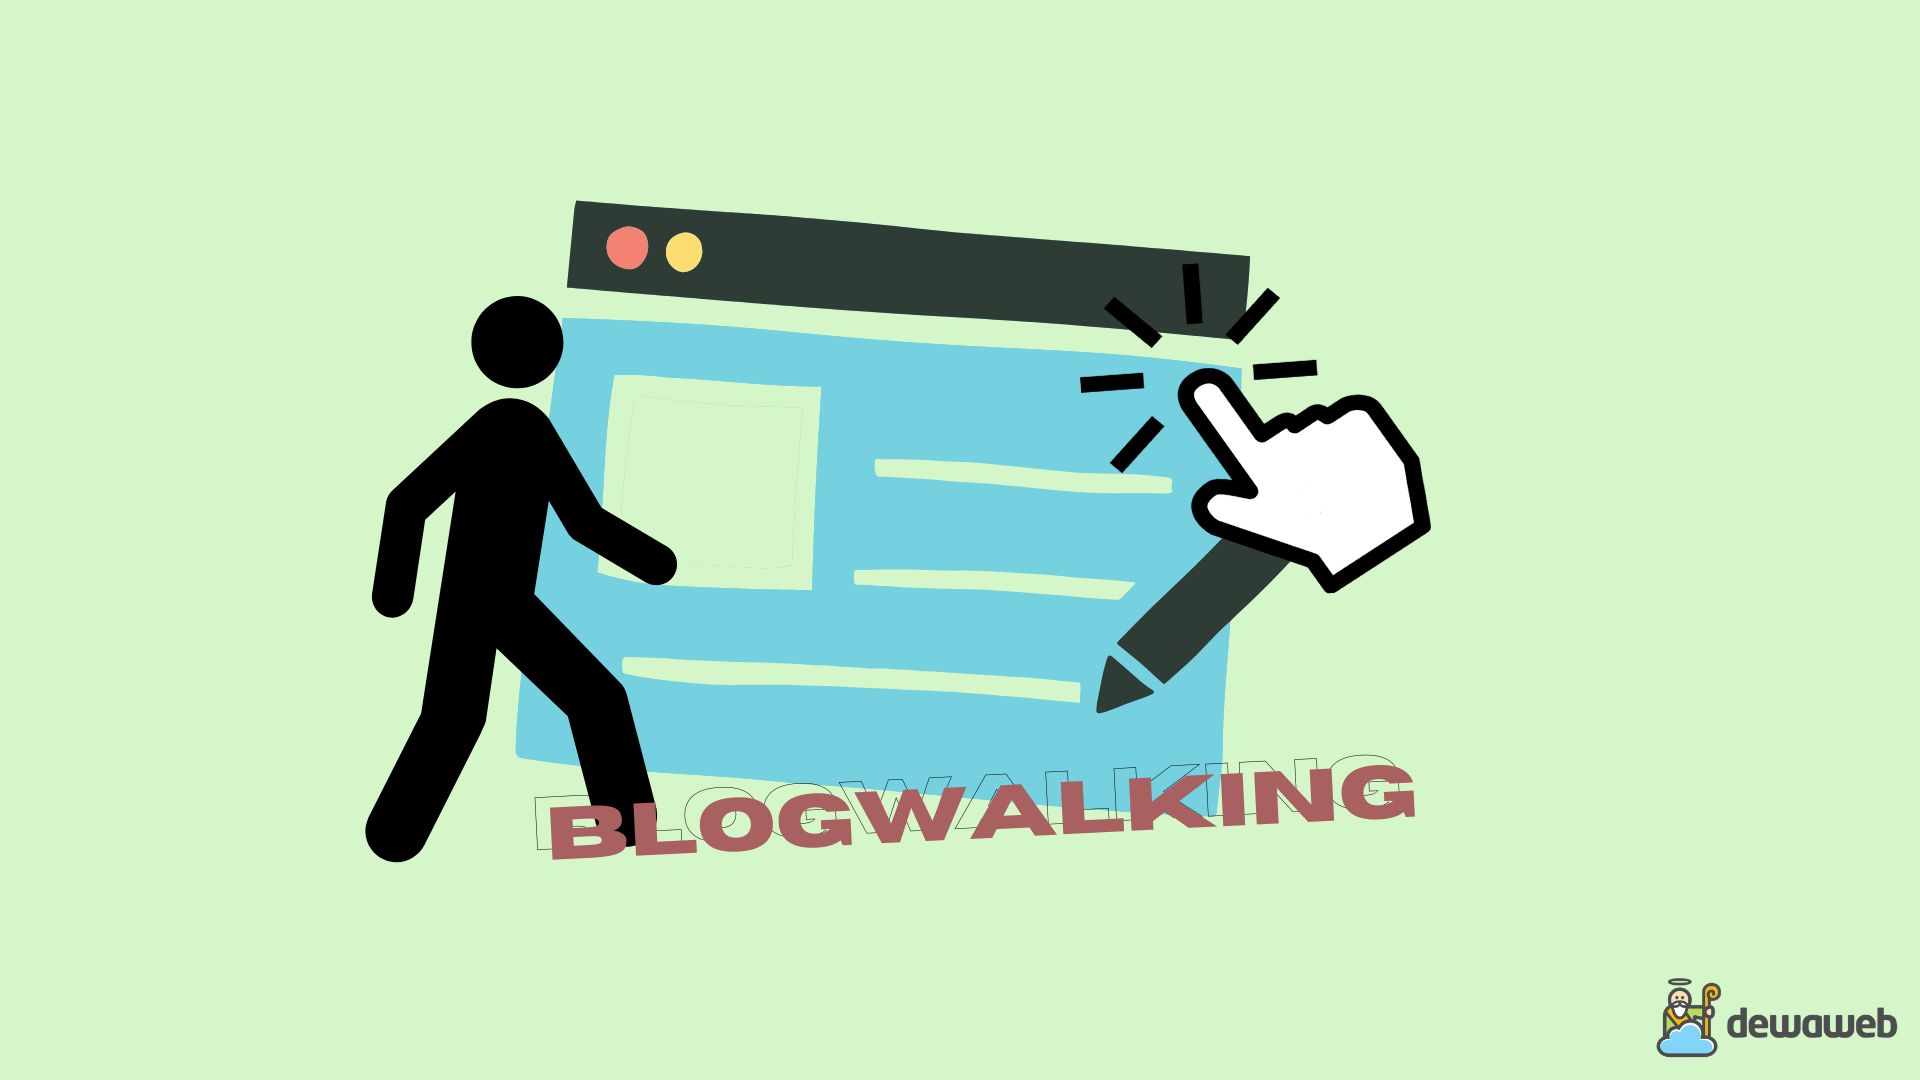 blogwalking adalah